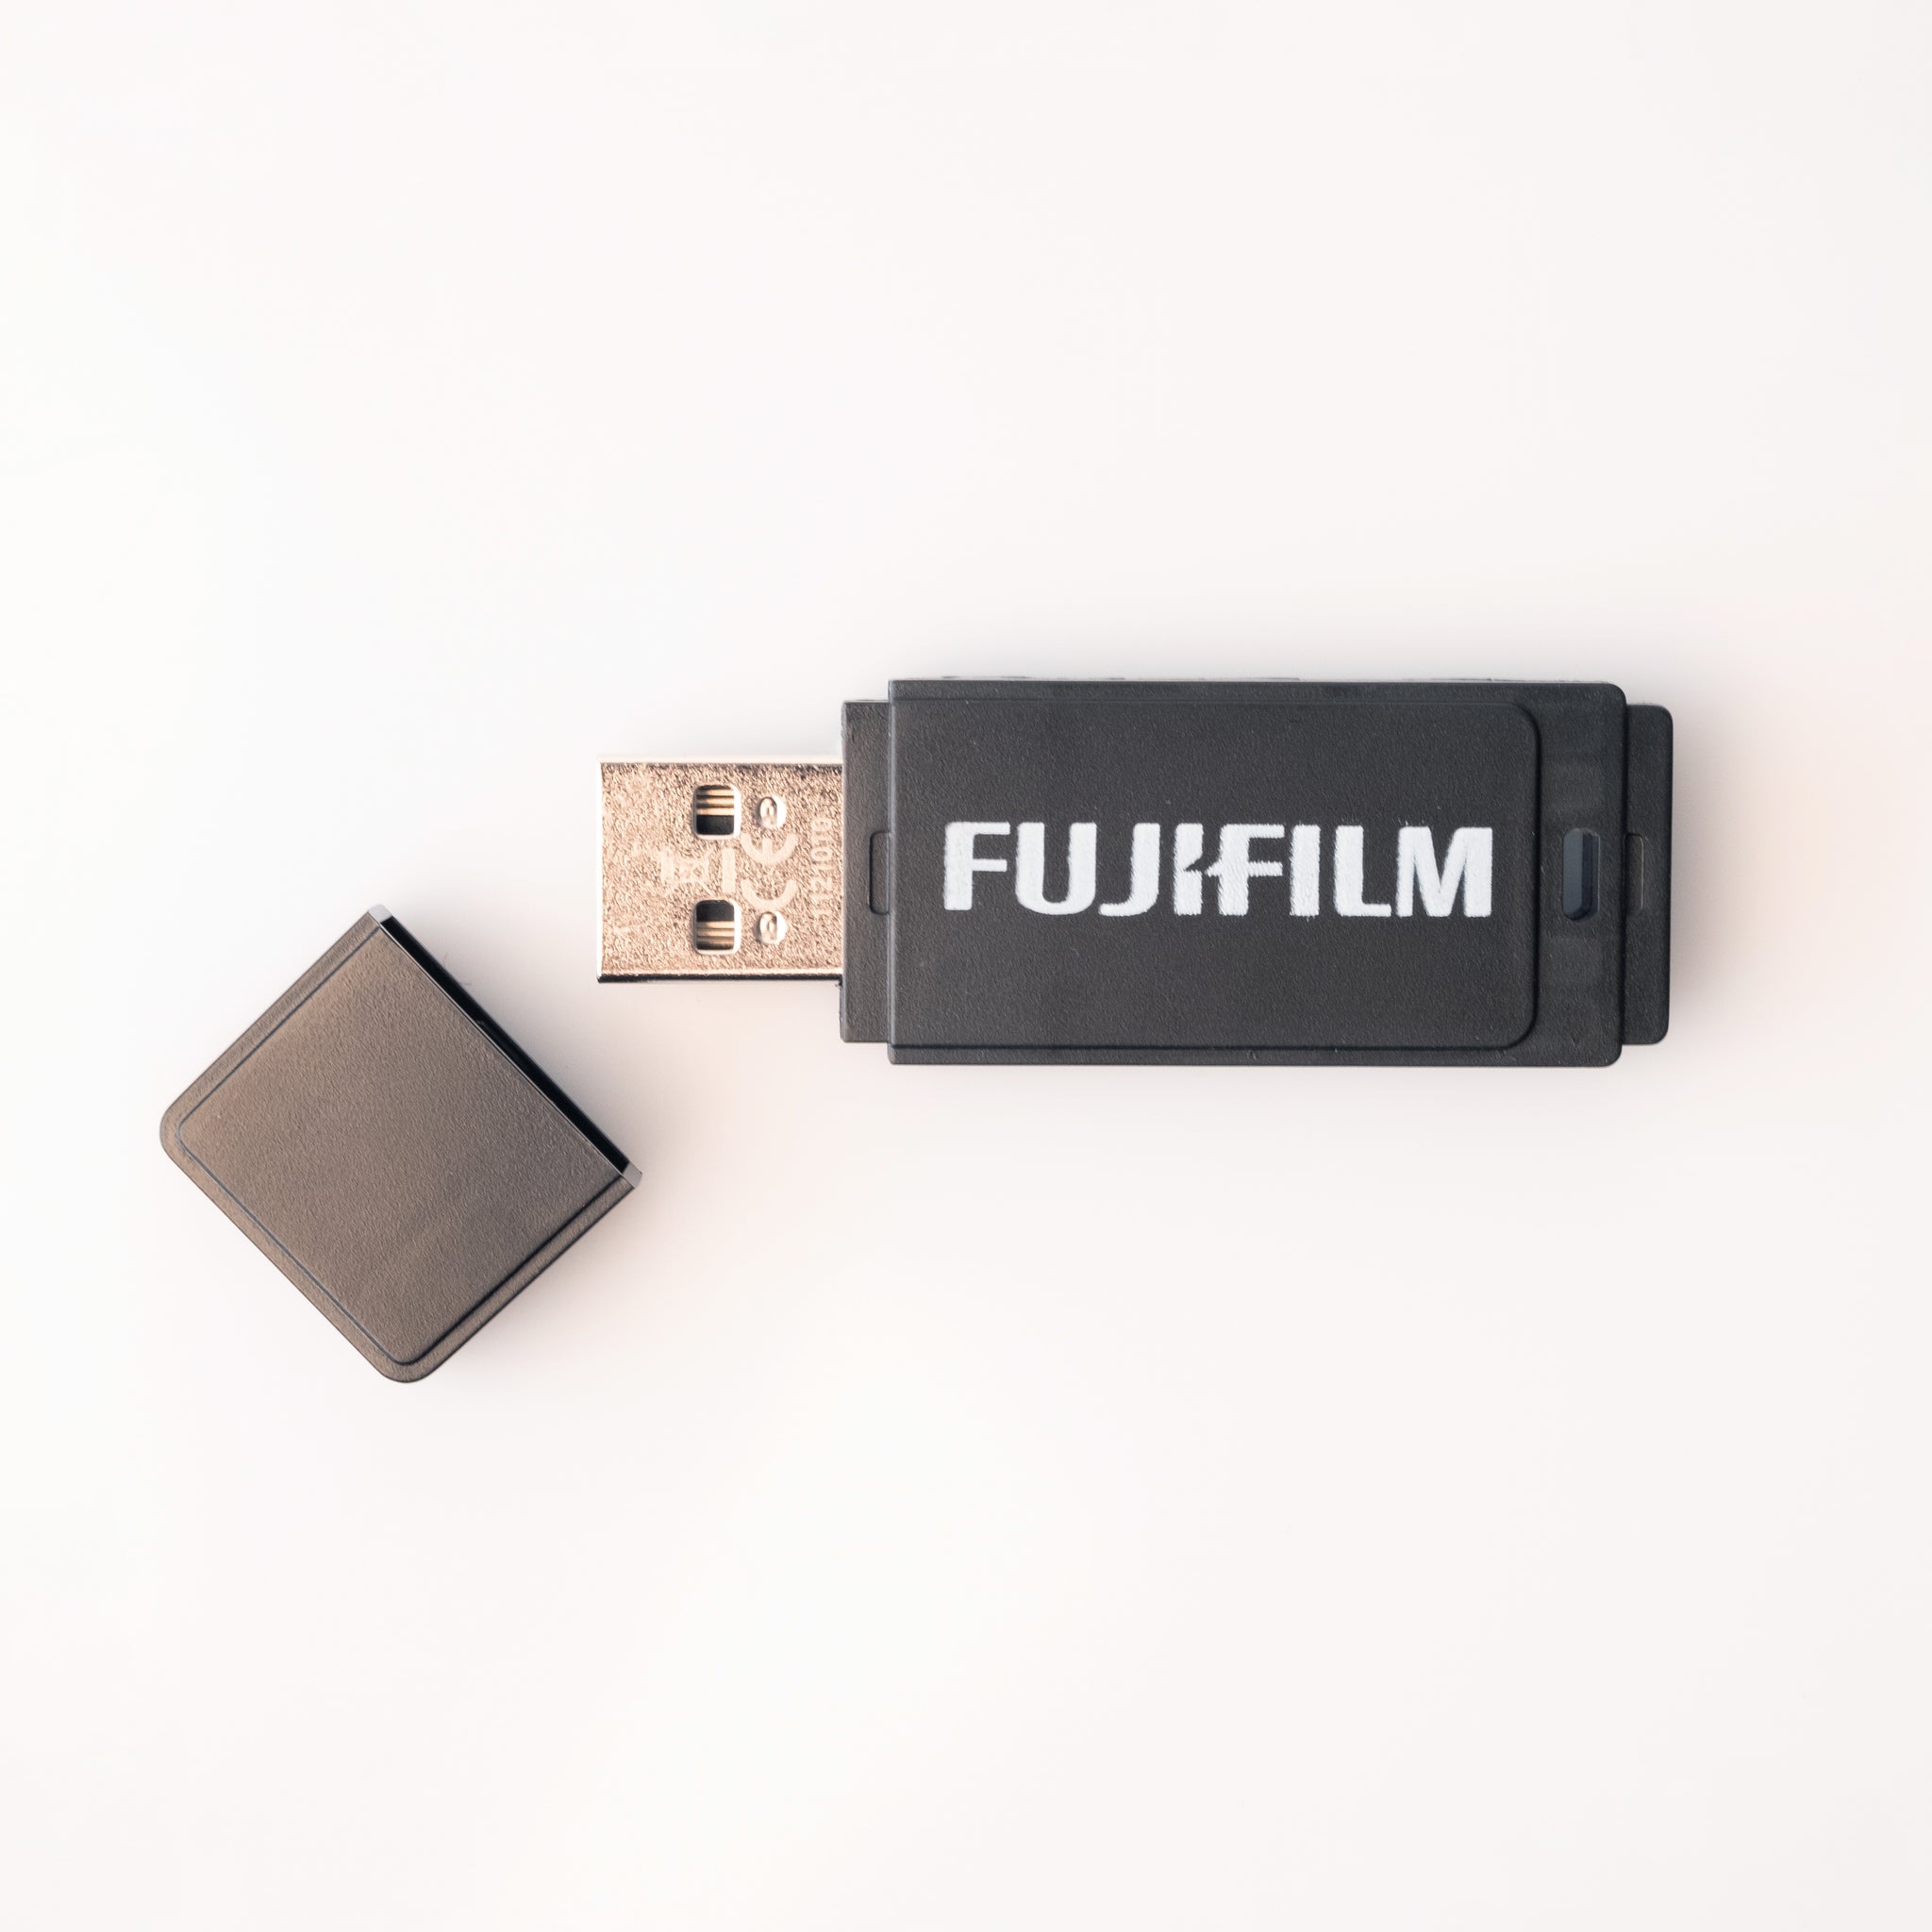 FUJIFILM USB 2.0 FLASH DRIVE 128GB